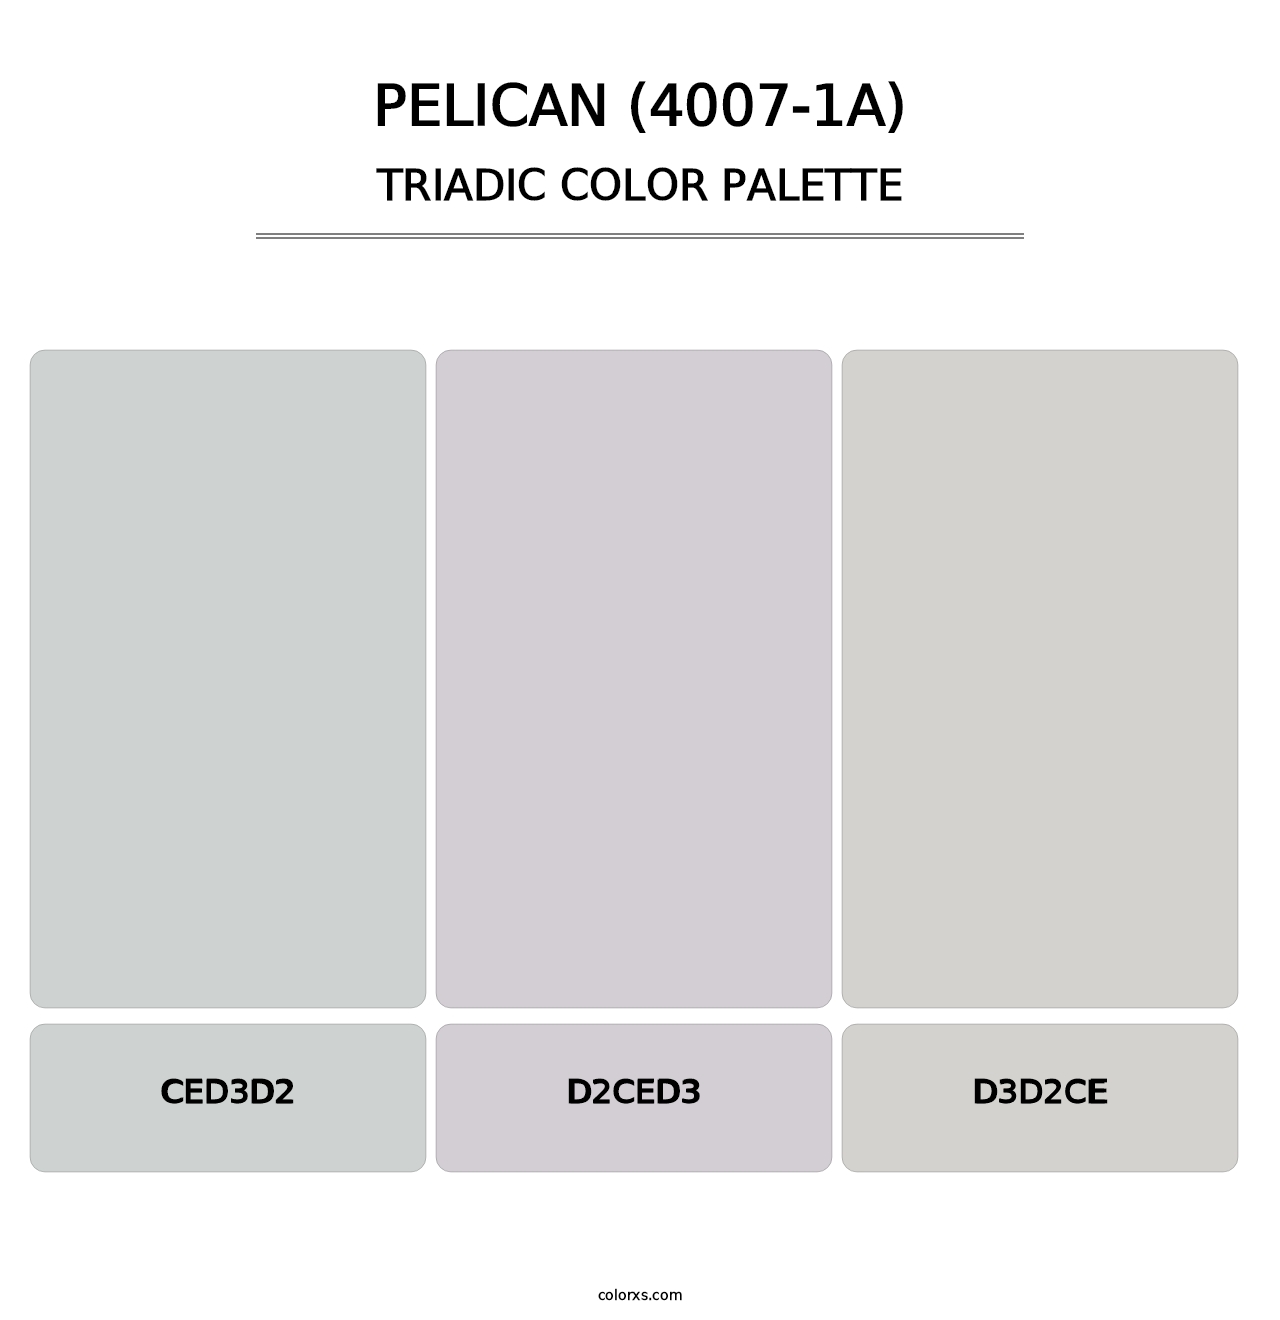 Pelican (4007-1A) - Triadic Color Palette